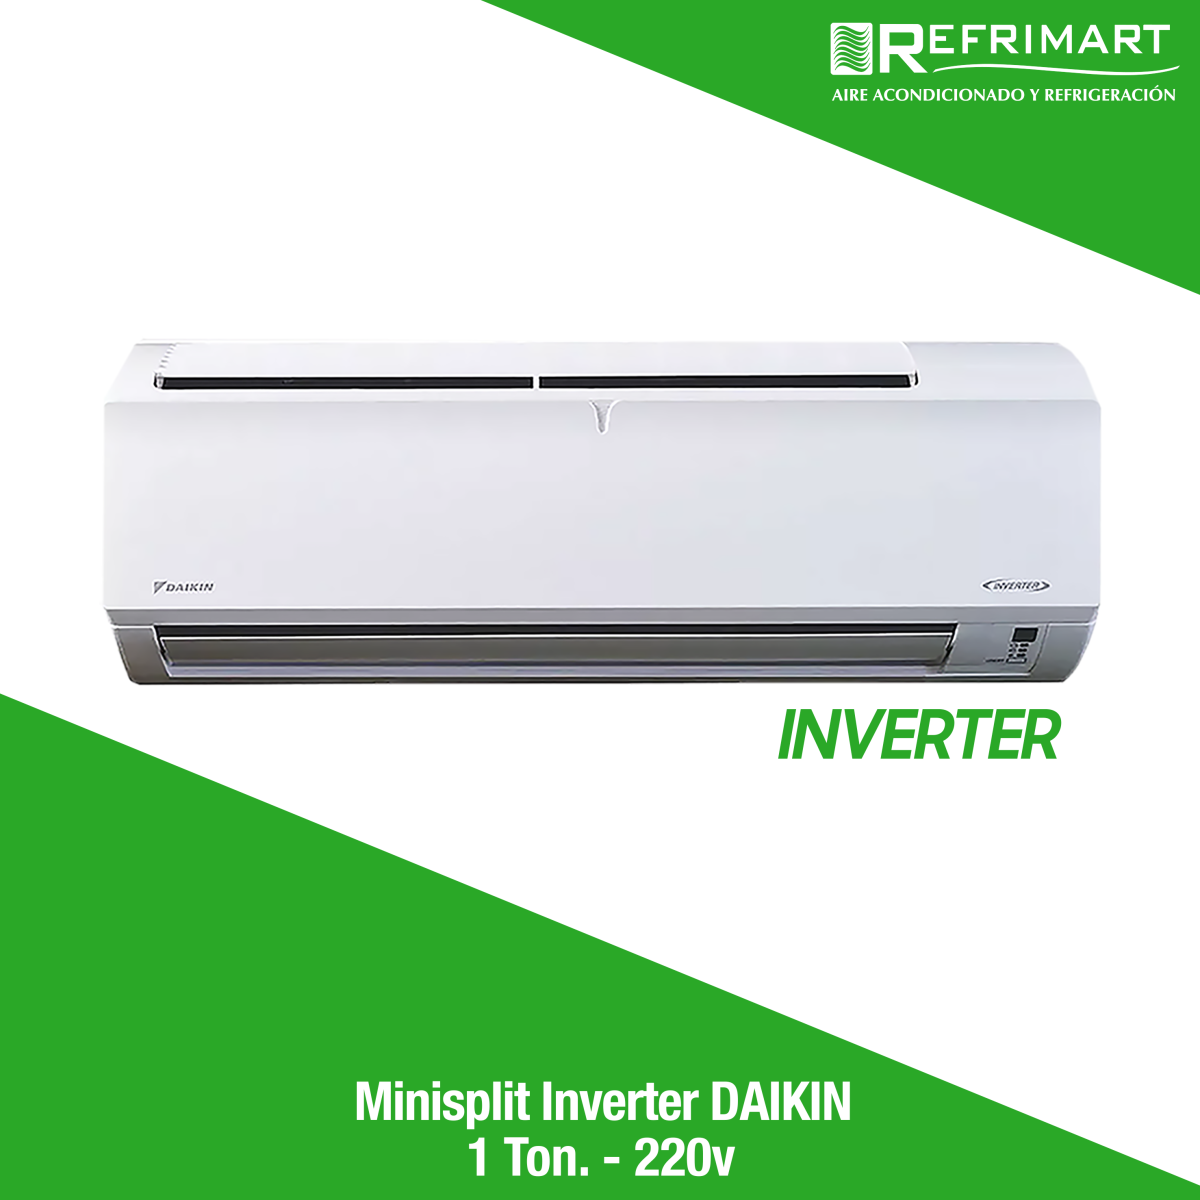 Minisplit Inverter DAIKIN - 1 Ton. 220v